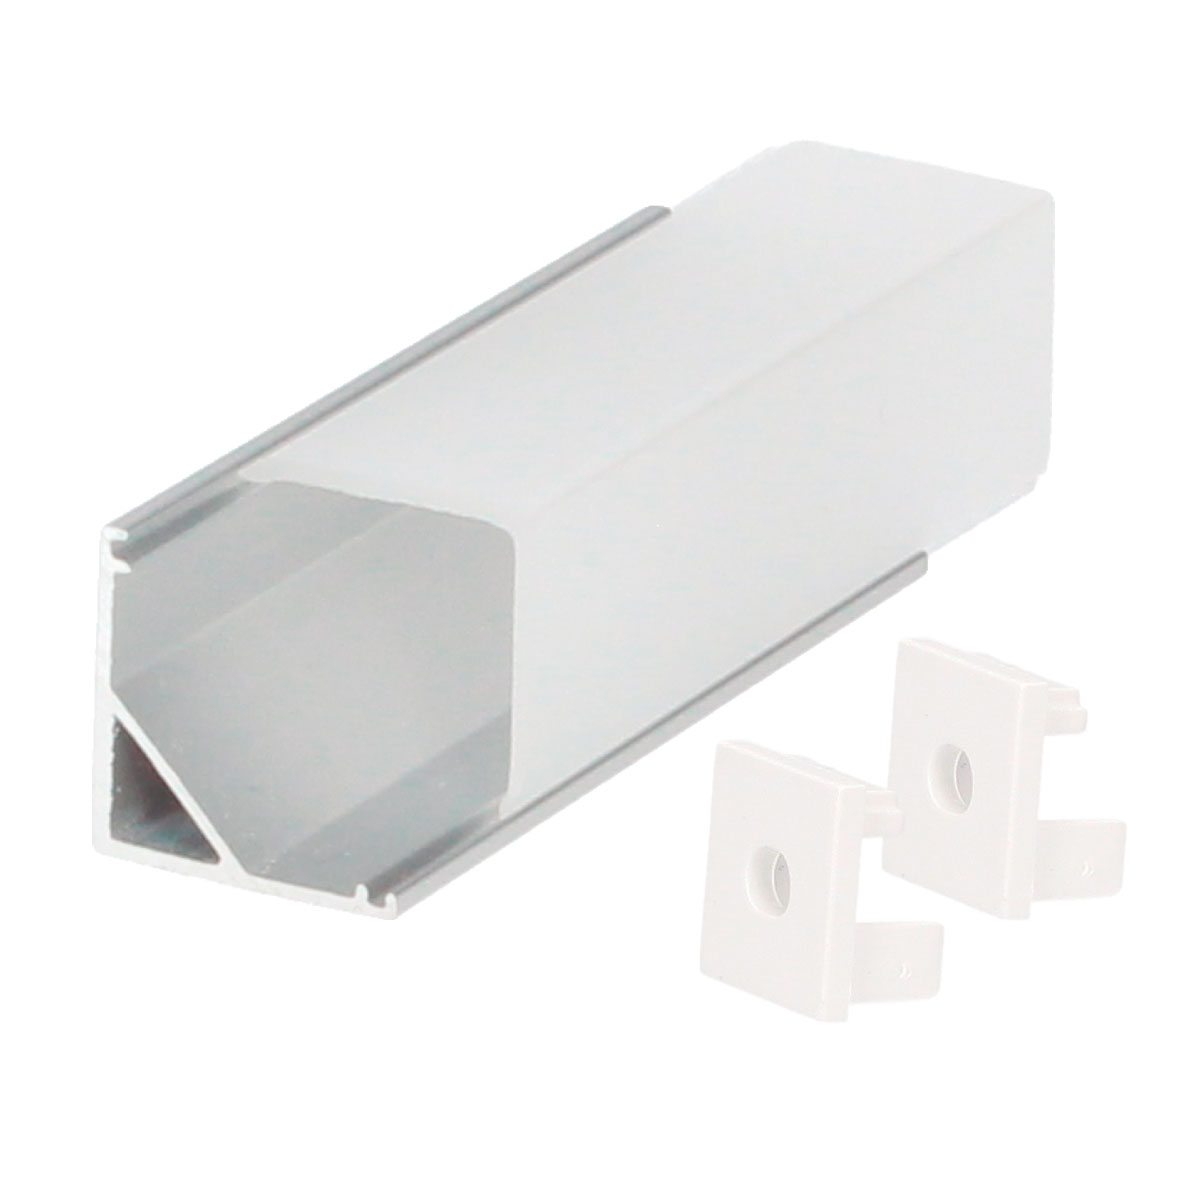 Kit 2M corner aluminum profile for LED strips up to 10mm Square difusser